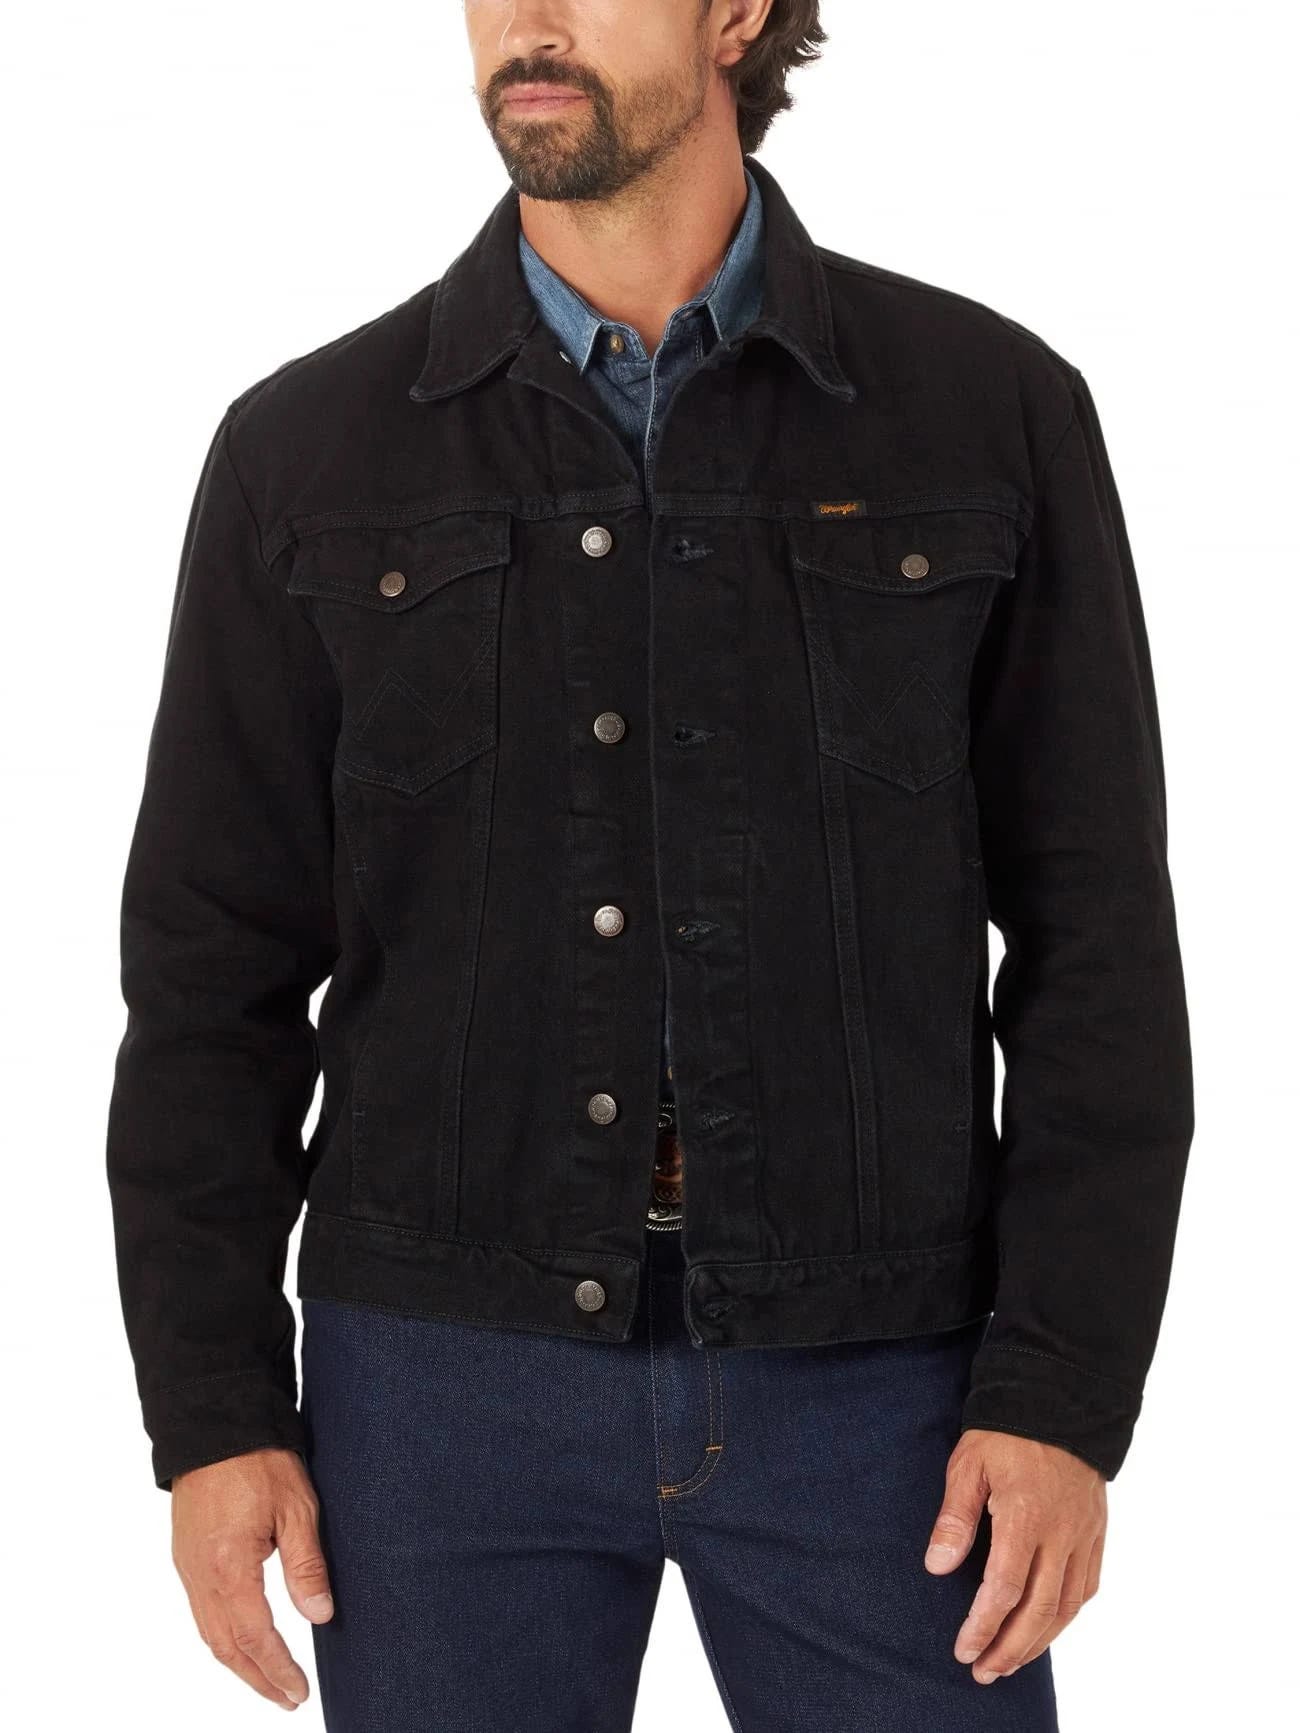 Stylish Wrangler Denim Jacket for Men (Unlined) | Image